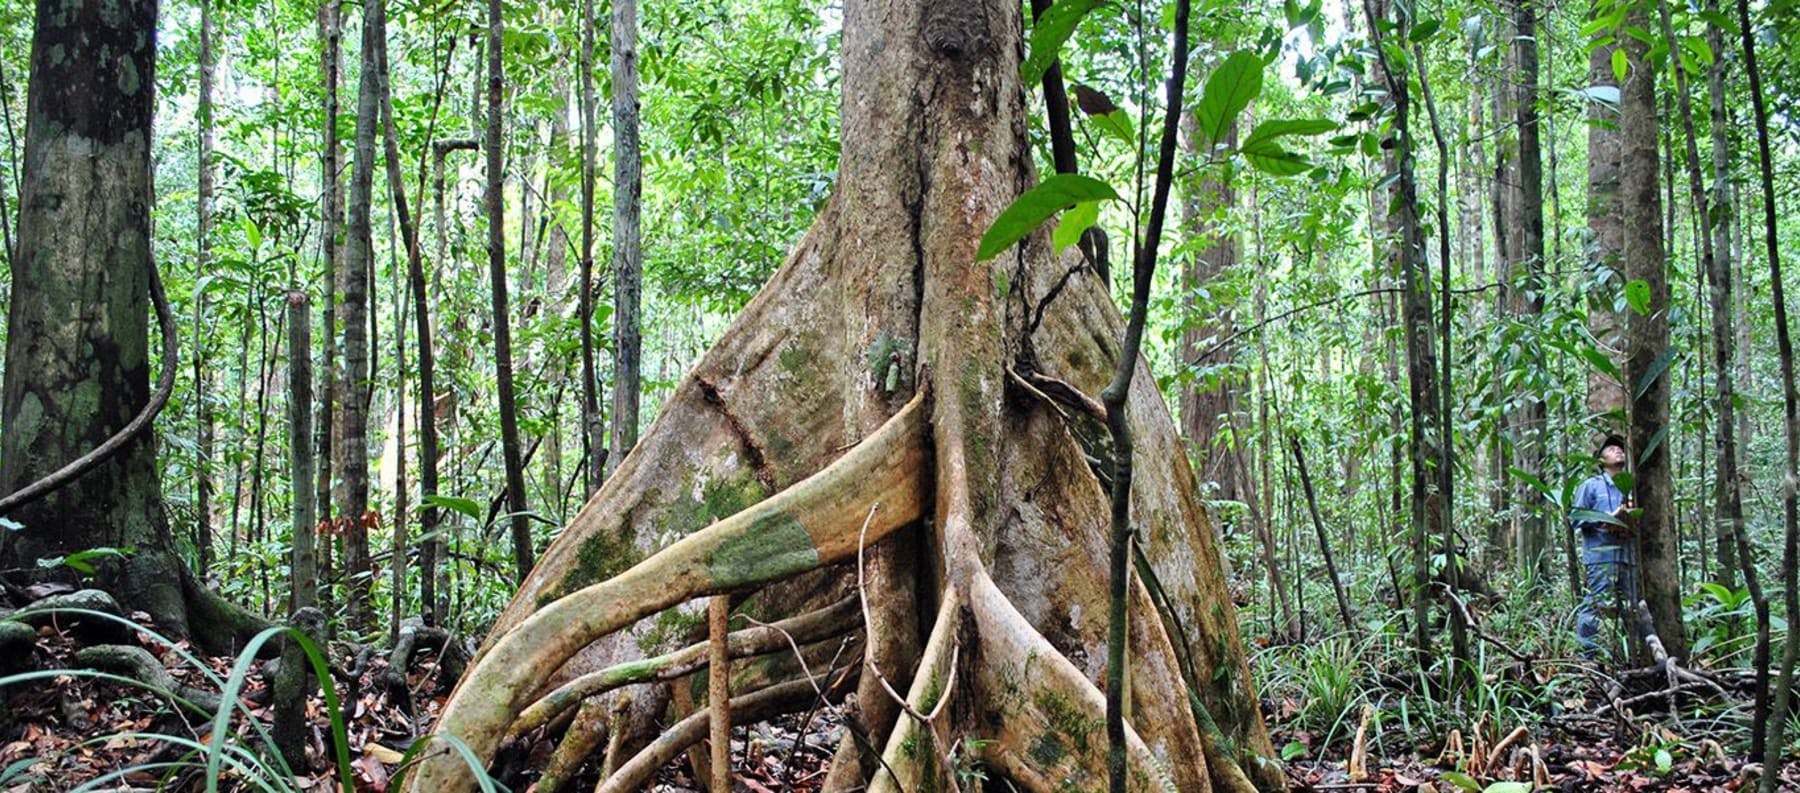 Peat swamp forest in Brunei Darussalam